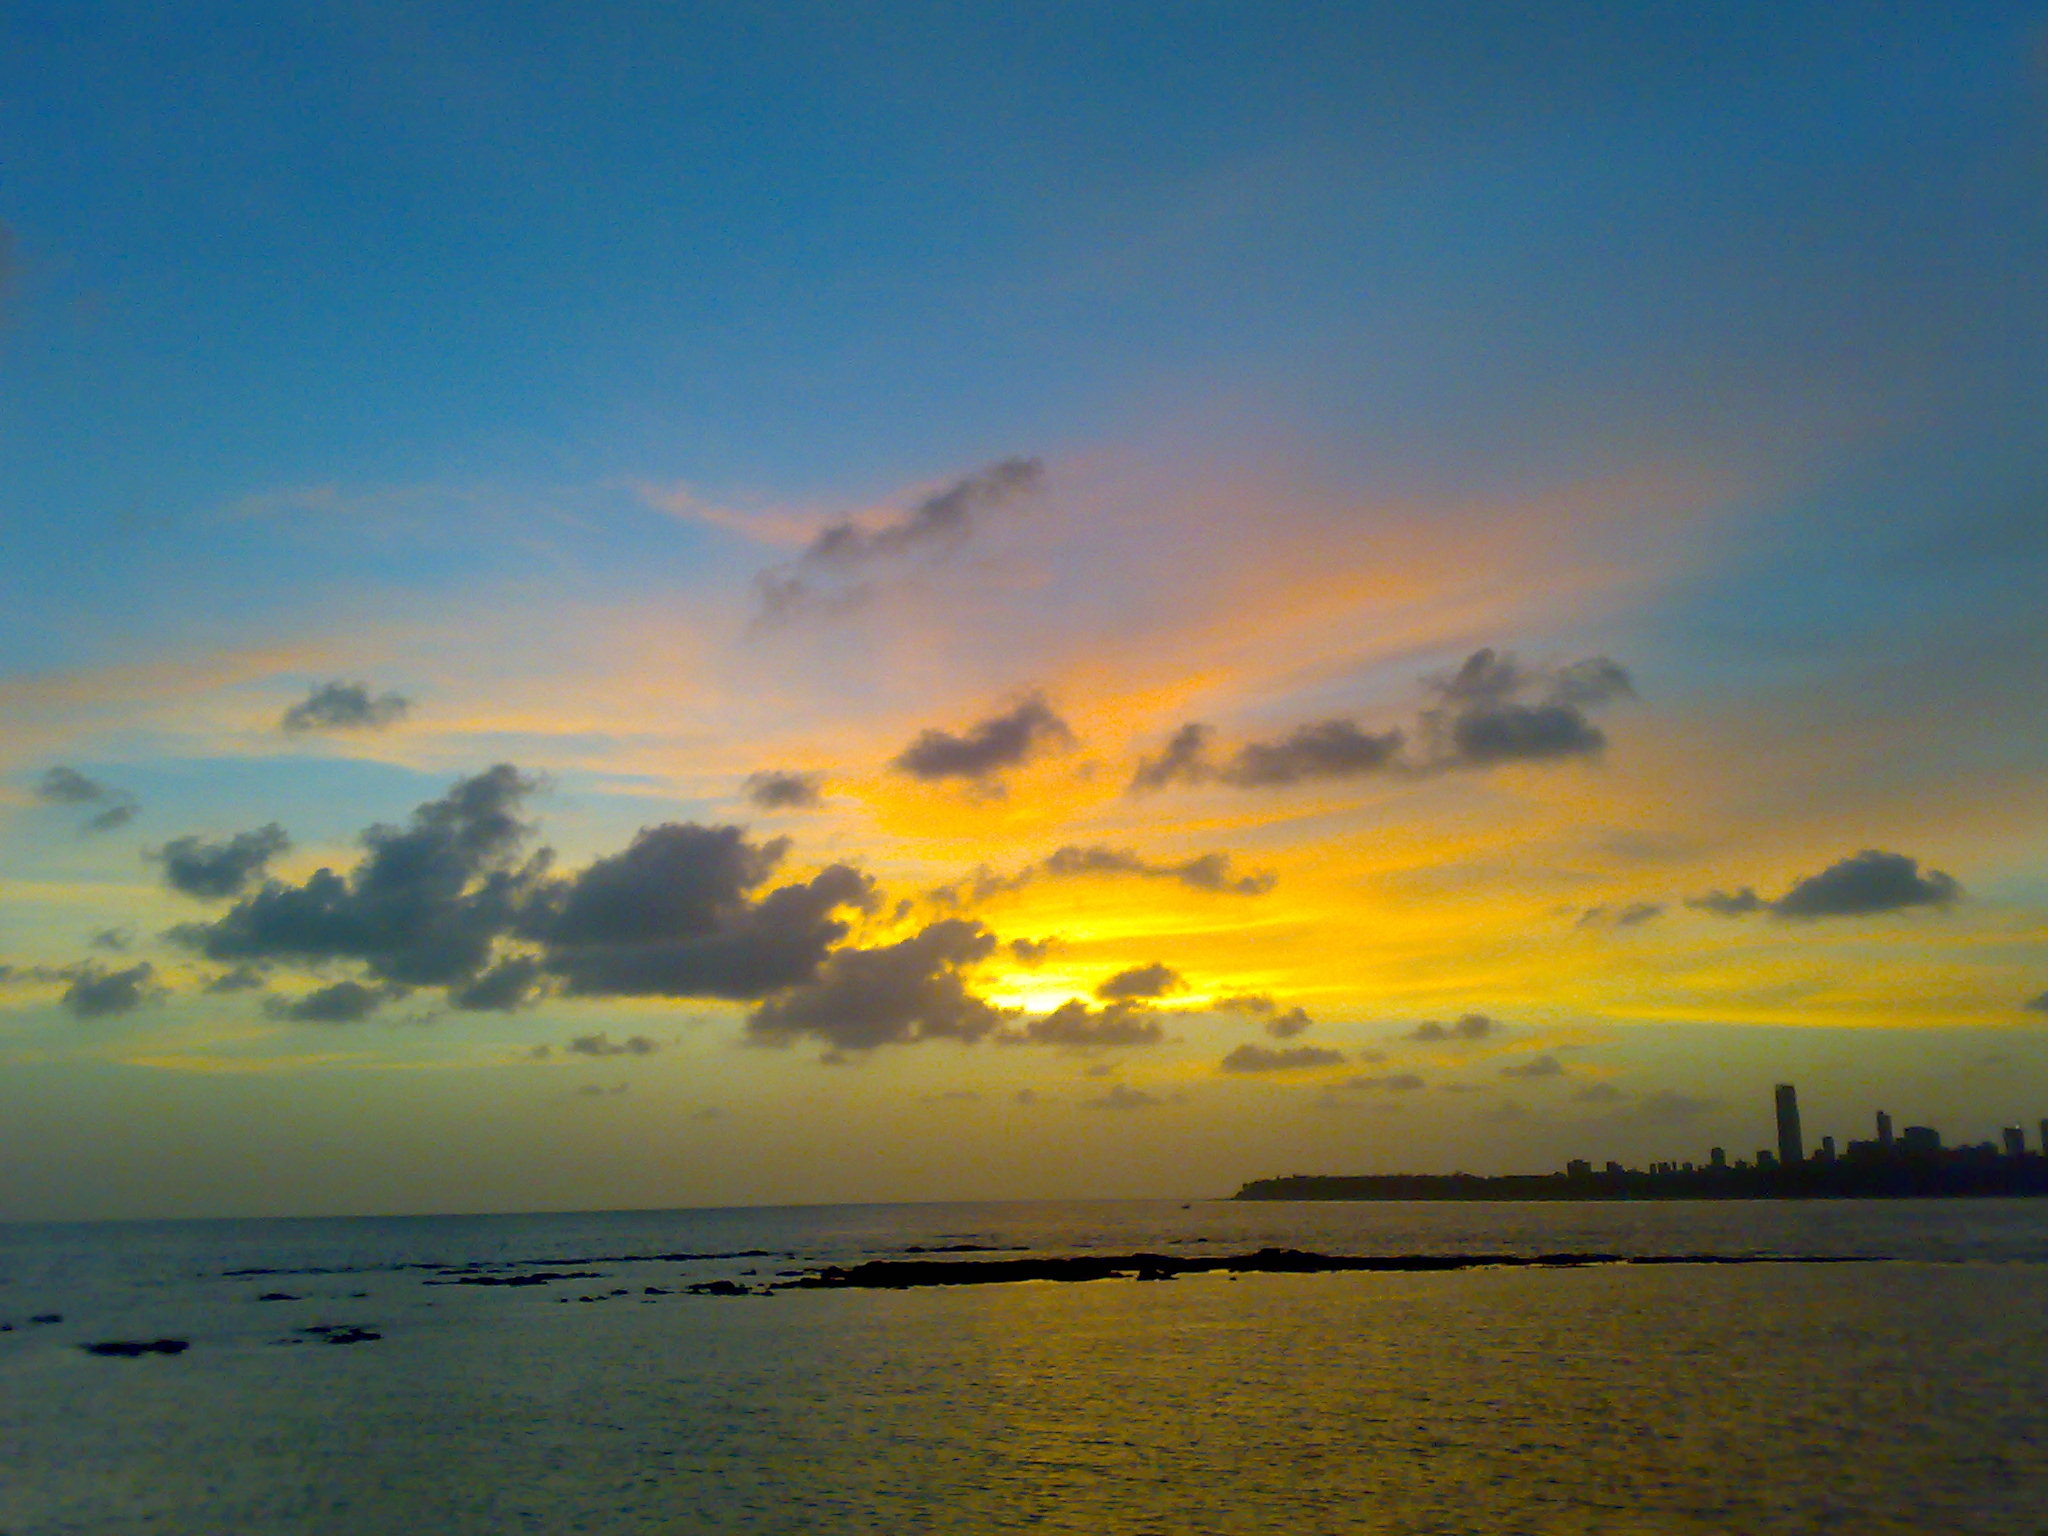 File:Yellow sunset at marine drive.jpg - Wikimedia Commons